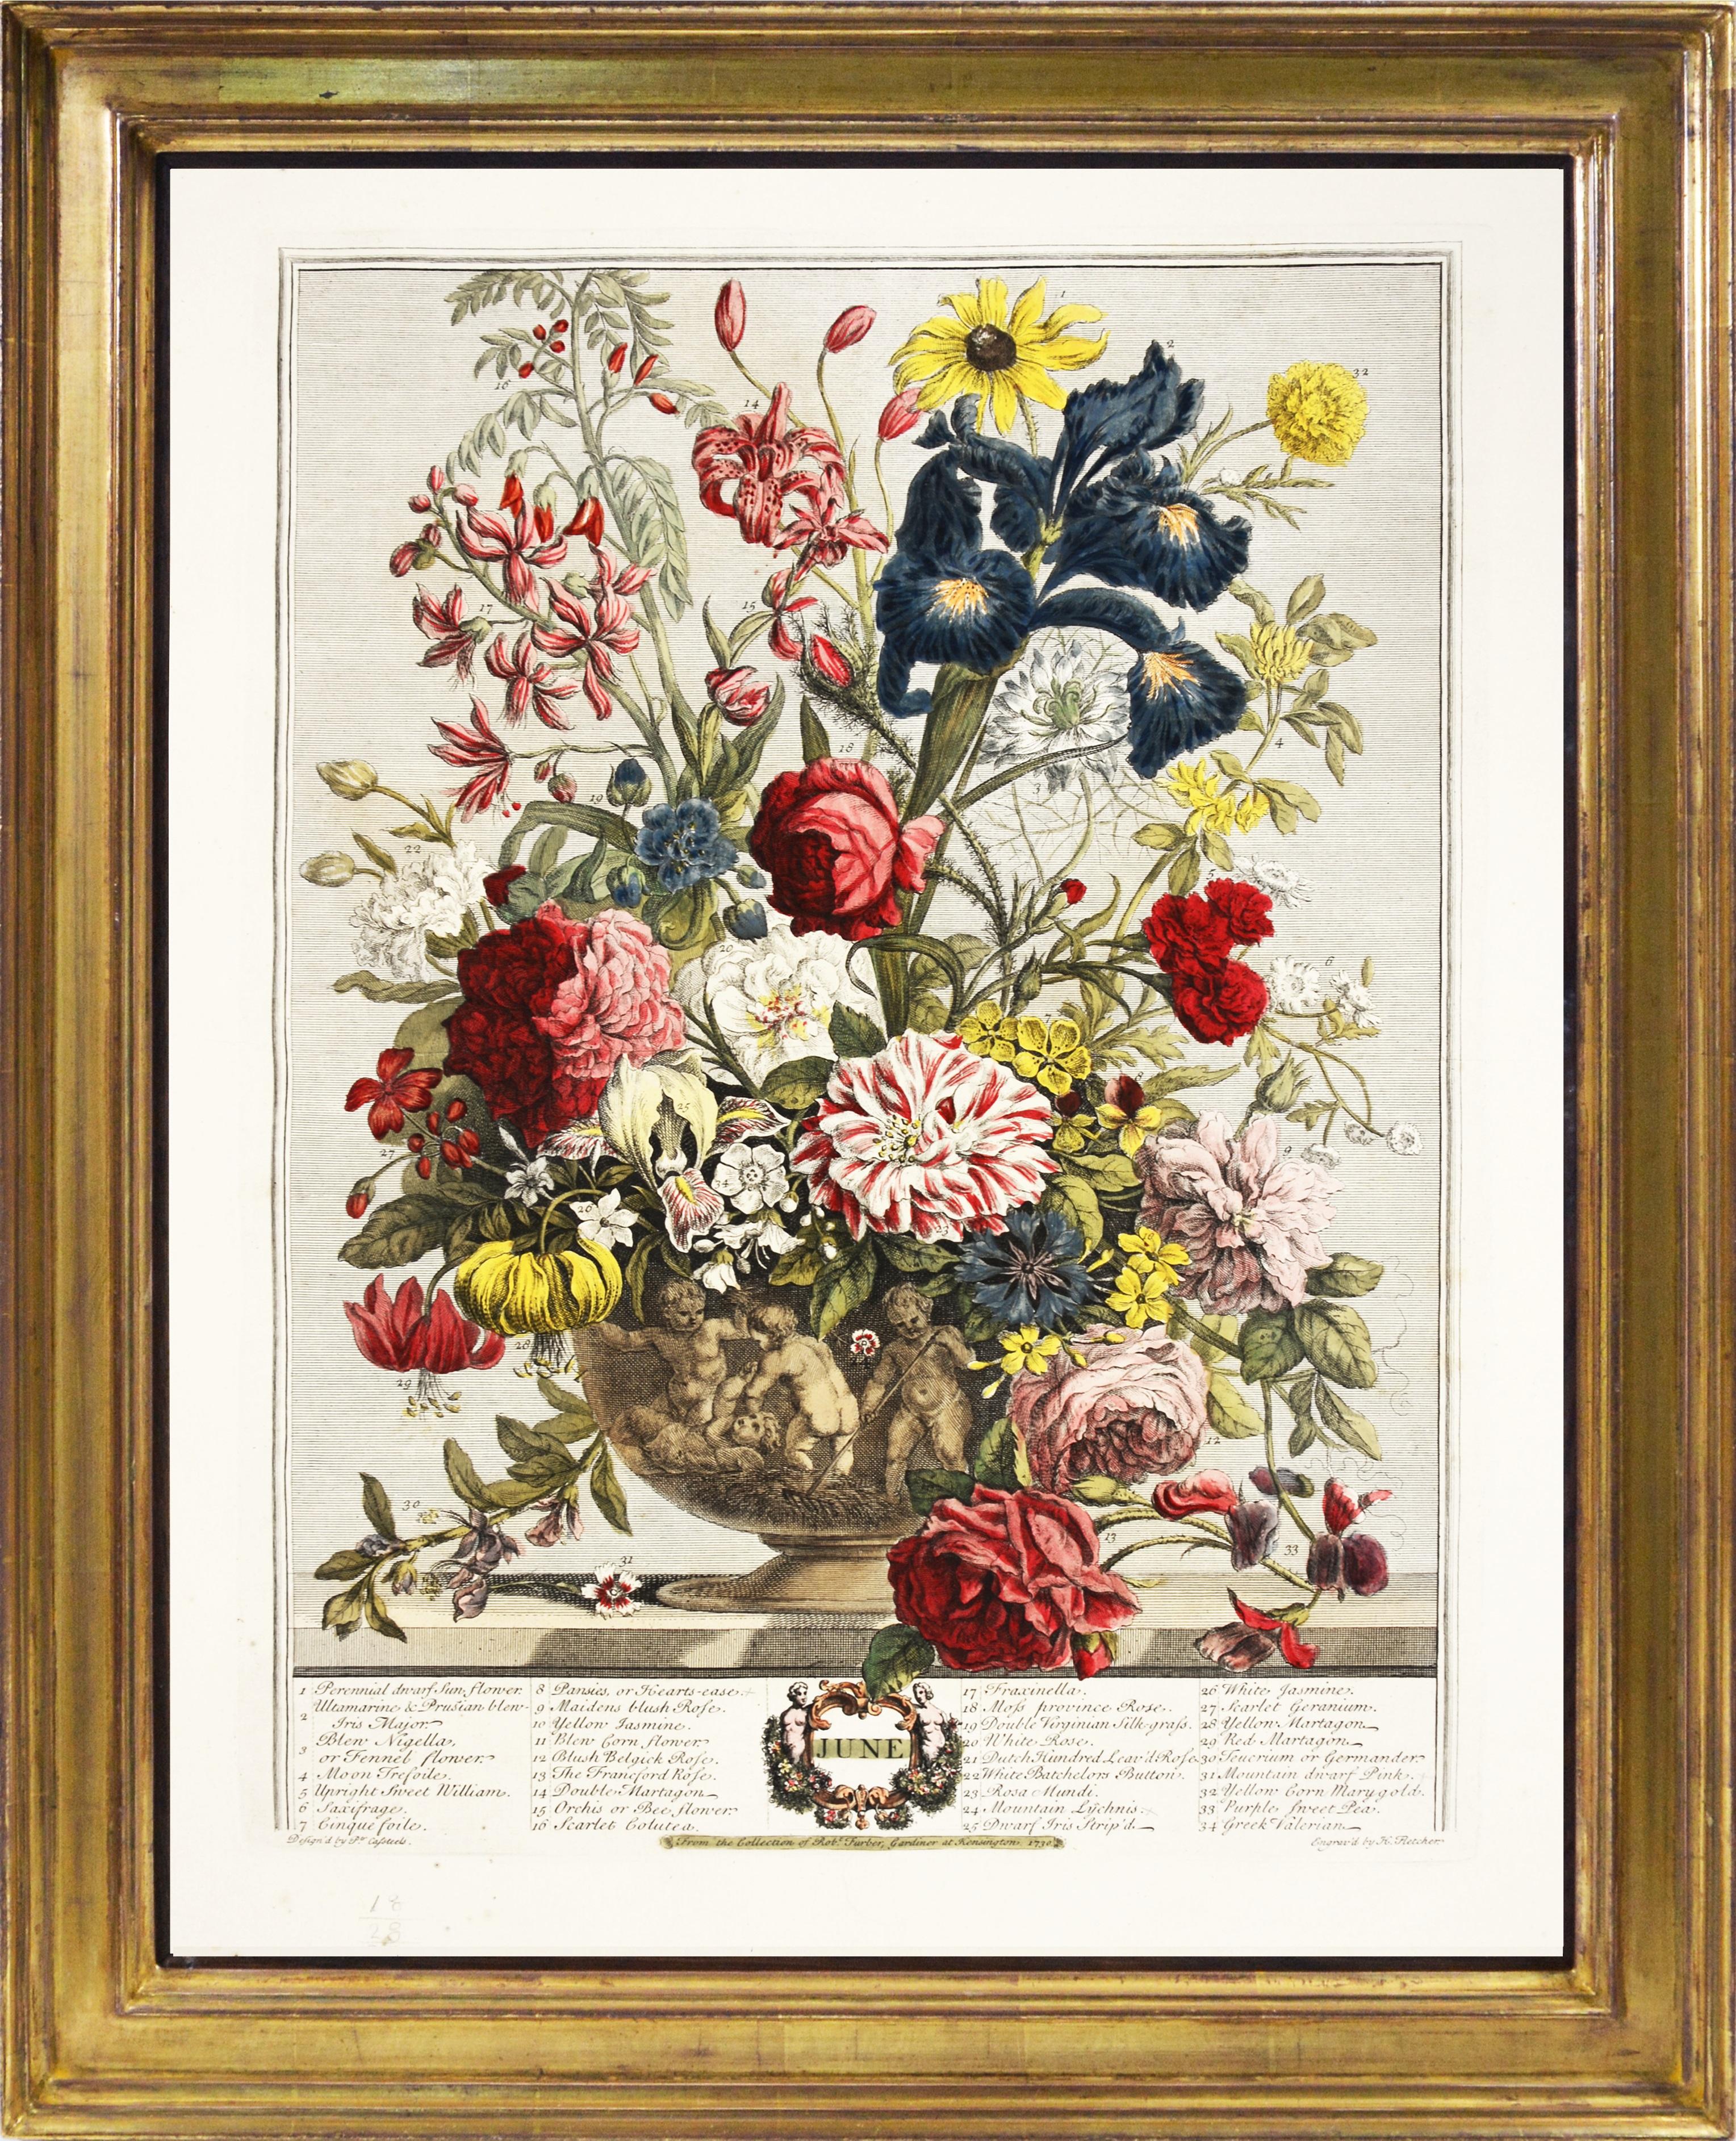 FURBER's Spectacular Floral Calendar: Twelve Months of Flowers - Naturalistic Print by Robert Furber